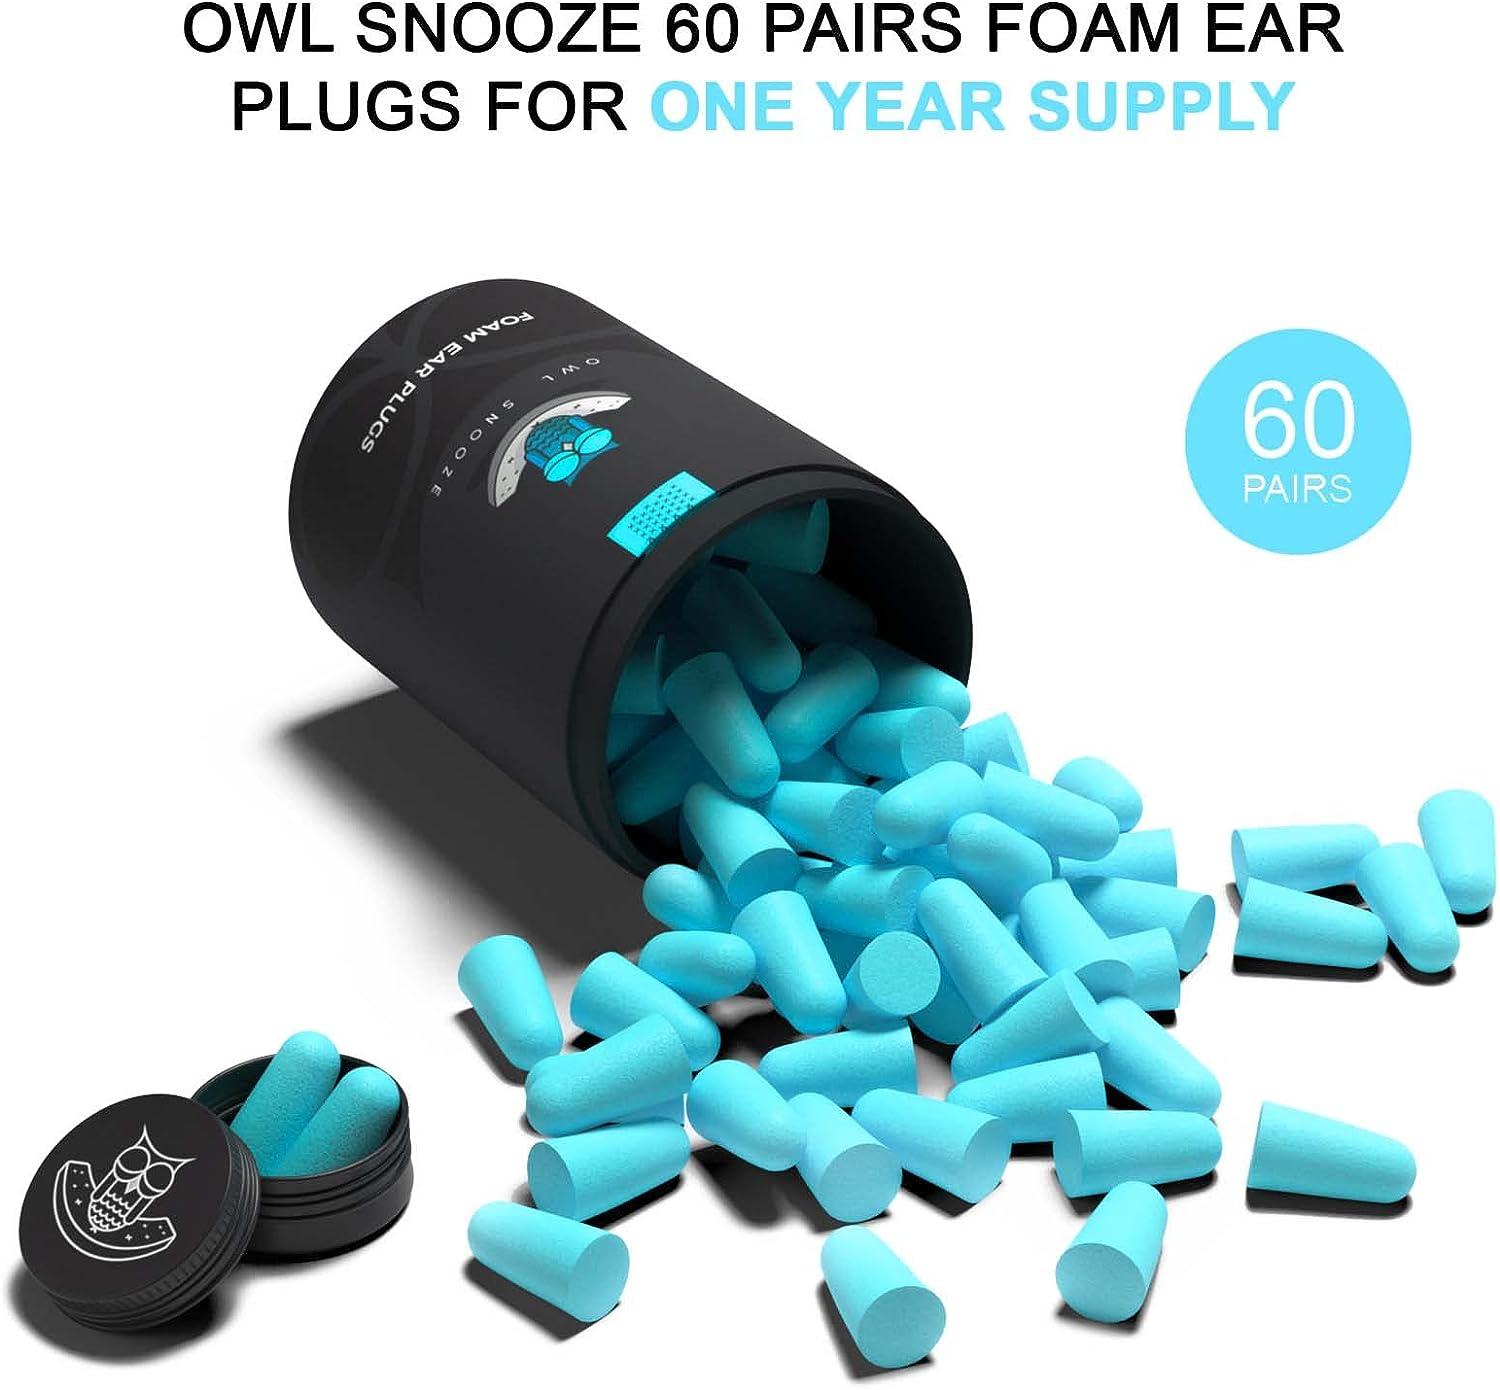 Ear Plugs for Sleeping The Best Noise Cancelling Ear Plugs for Sleeping by  Owl Snooze 60 Pairs 38dB Highest SNR New & Upgraded Reusable & Custom fit  Super Soft Foam Earplugs